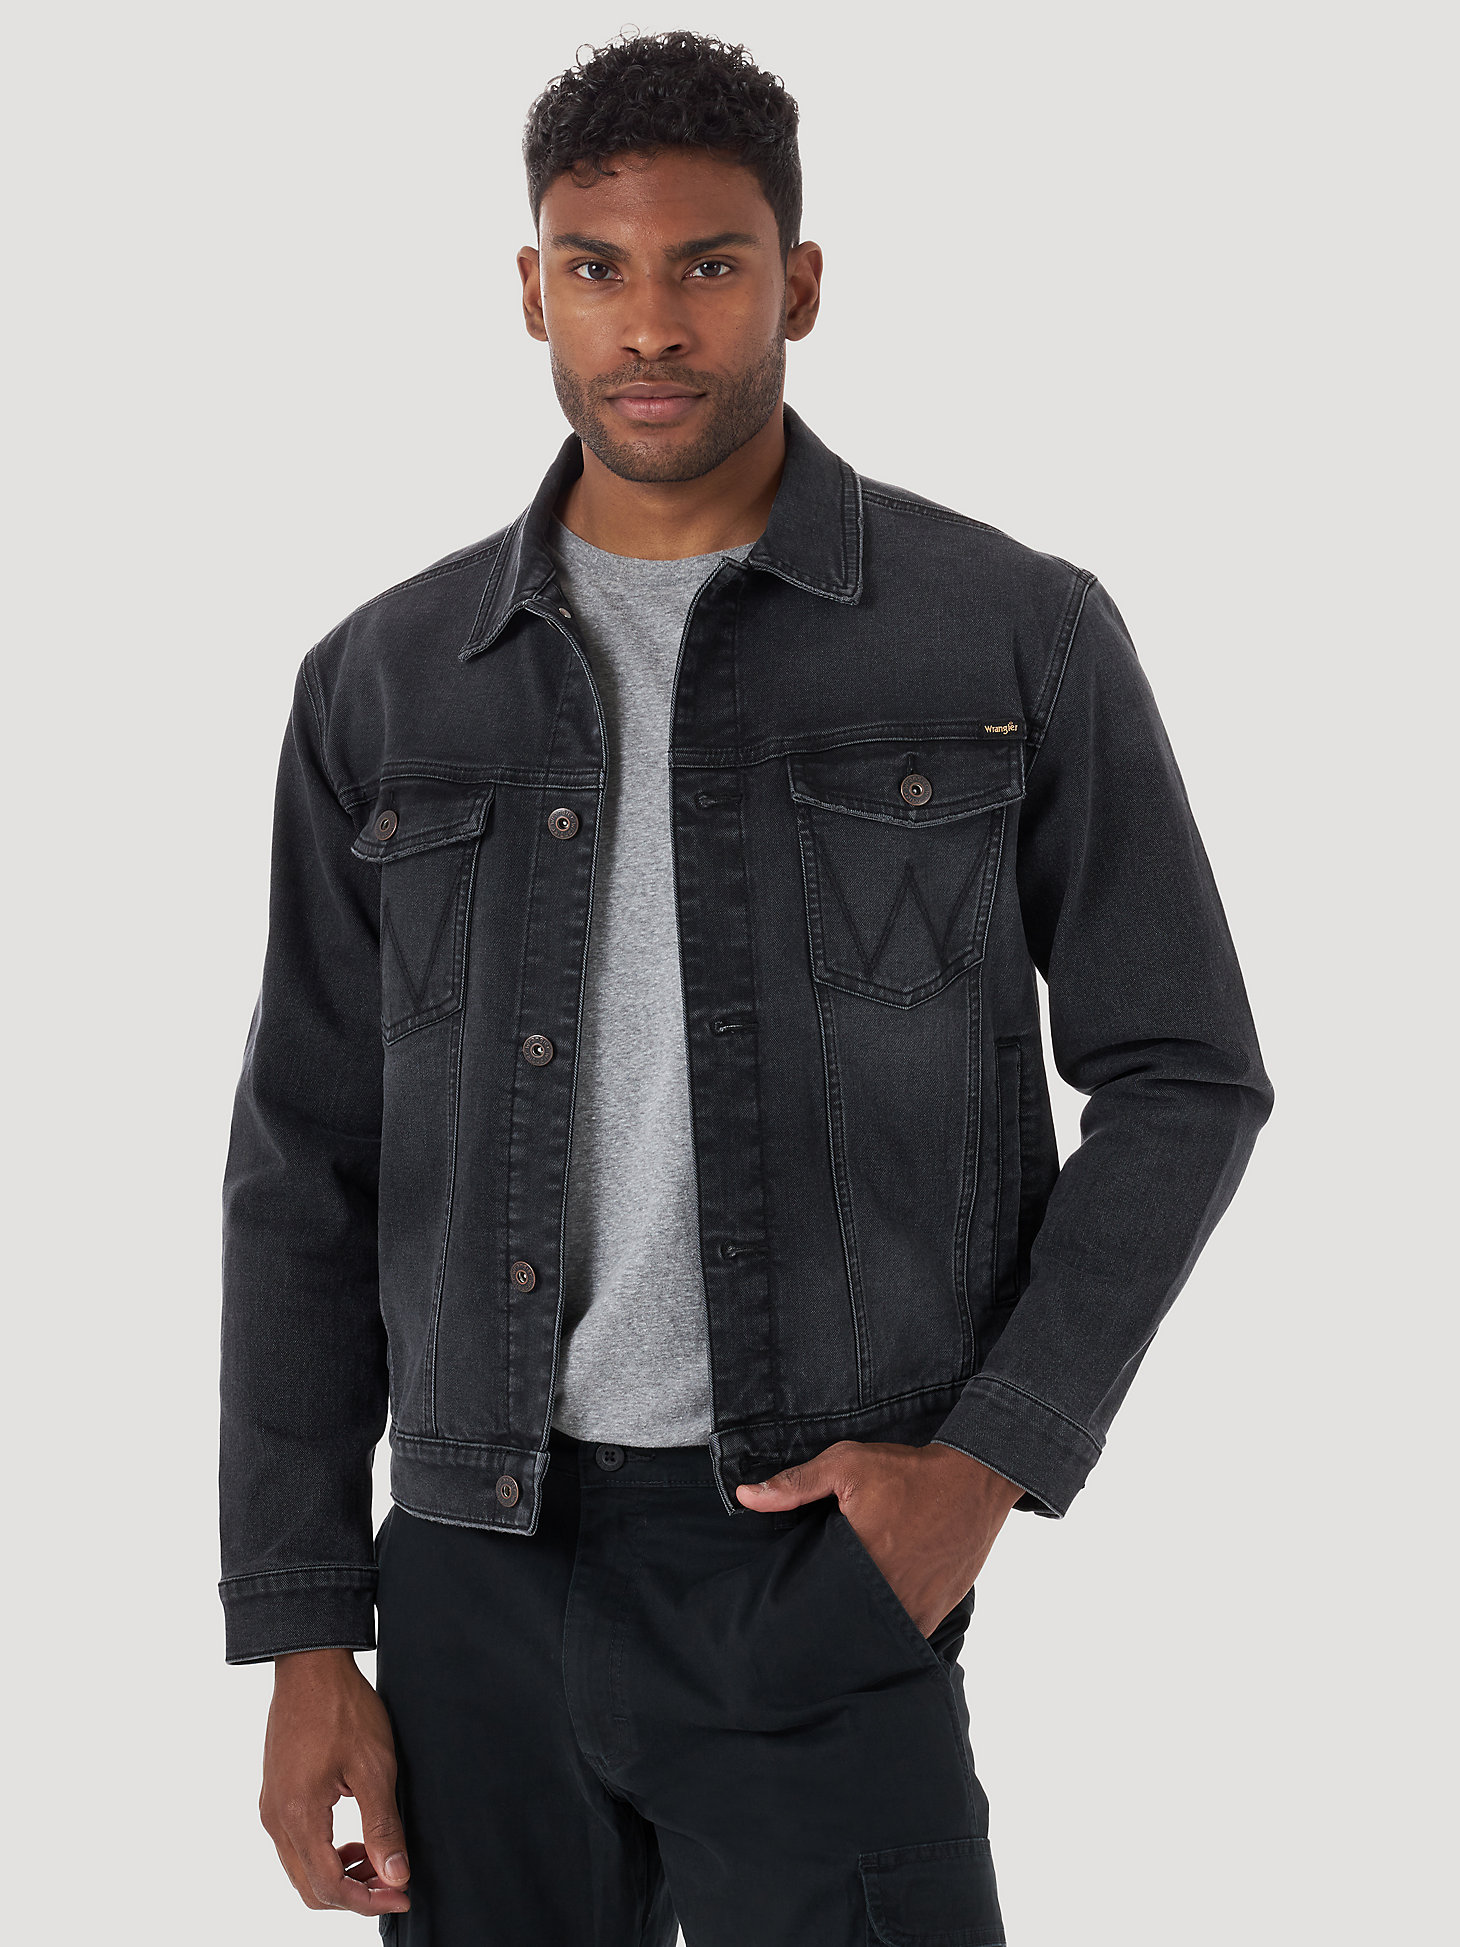 Men's Wrangler® Classic Denim Trucker Jacket in Black